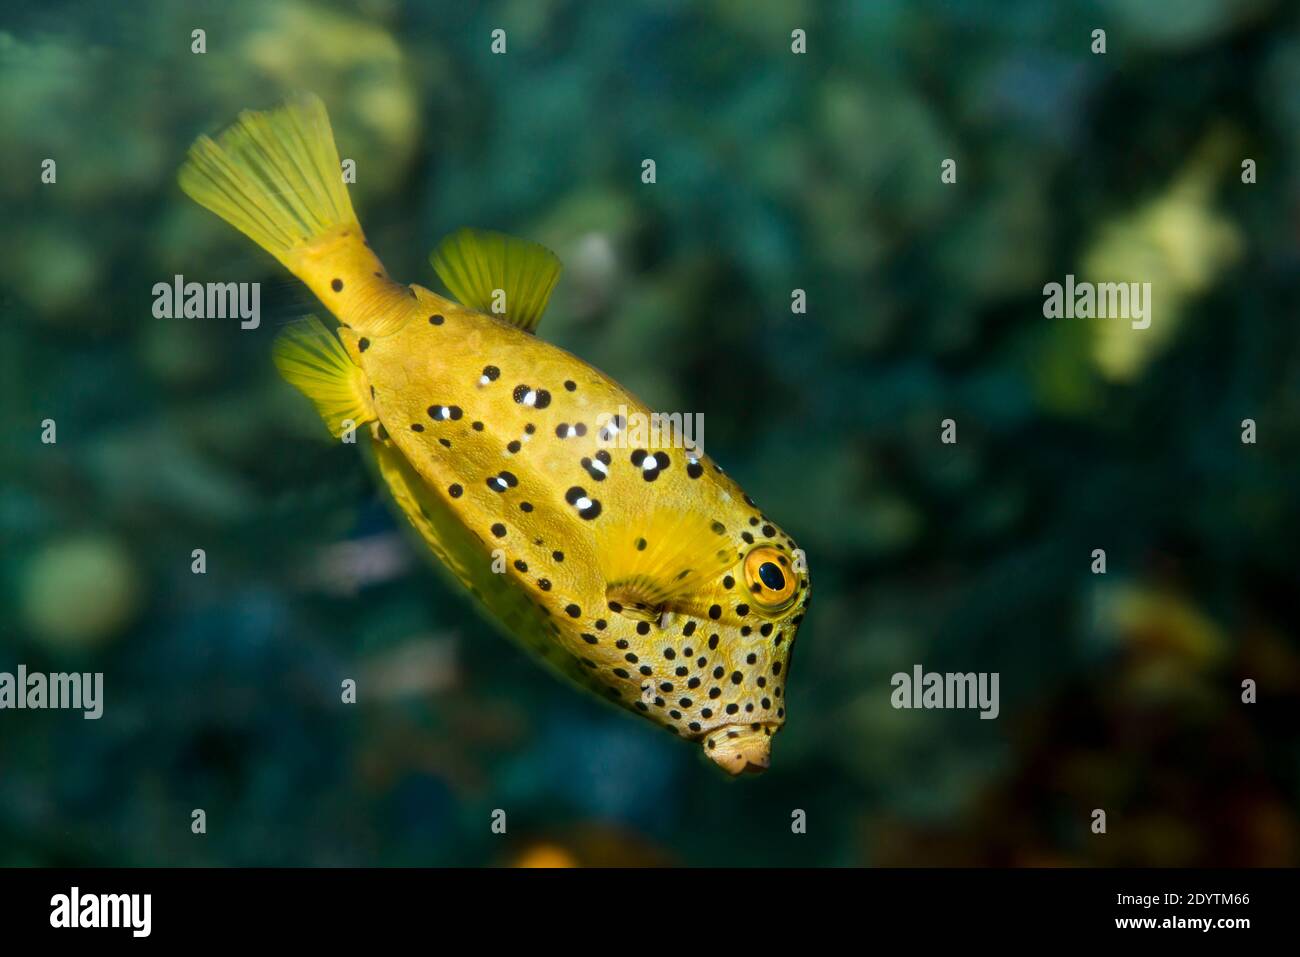 Apple Valley, Minnesota.  Yellow boxfish; Ostracion cubicus. Stock Photo